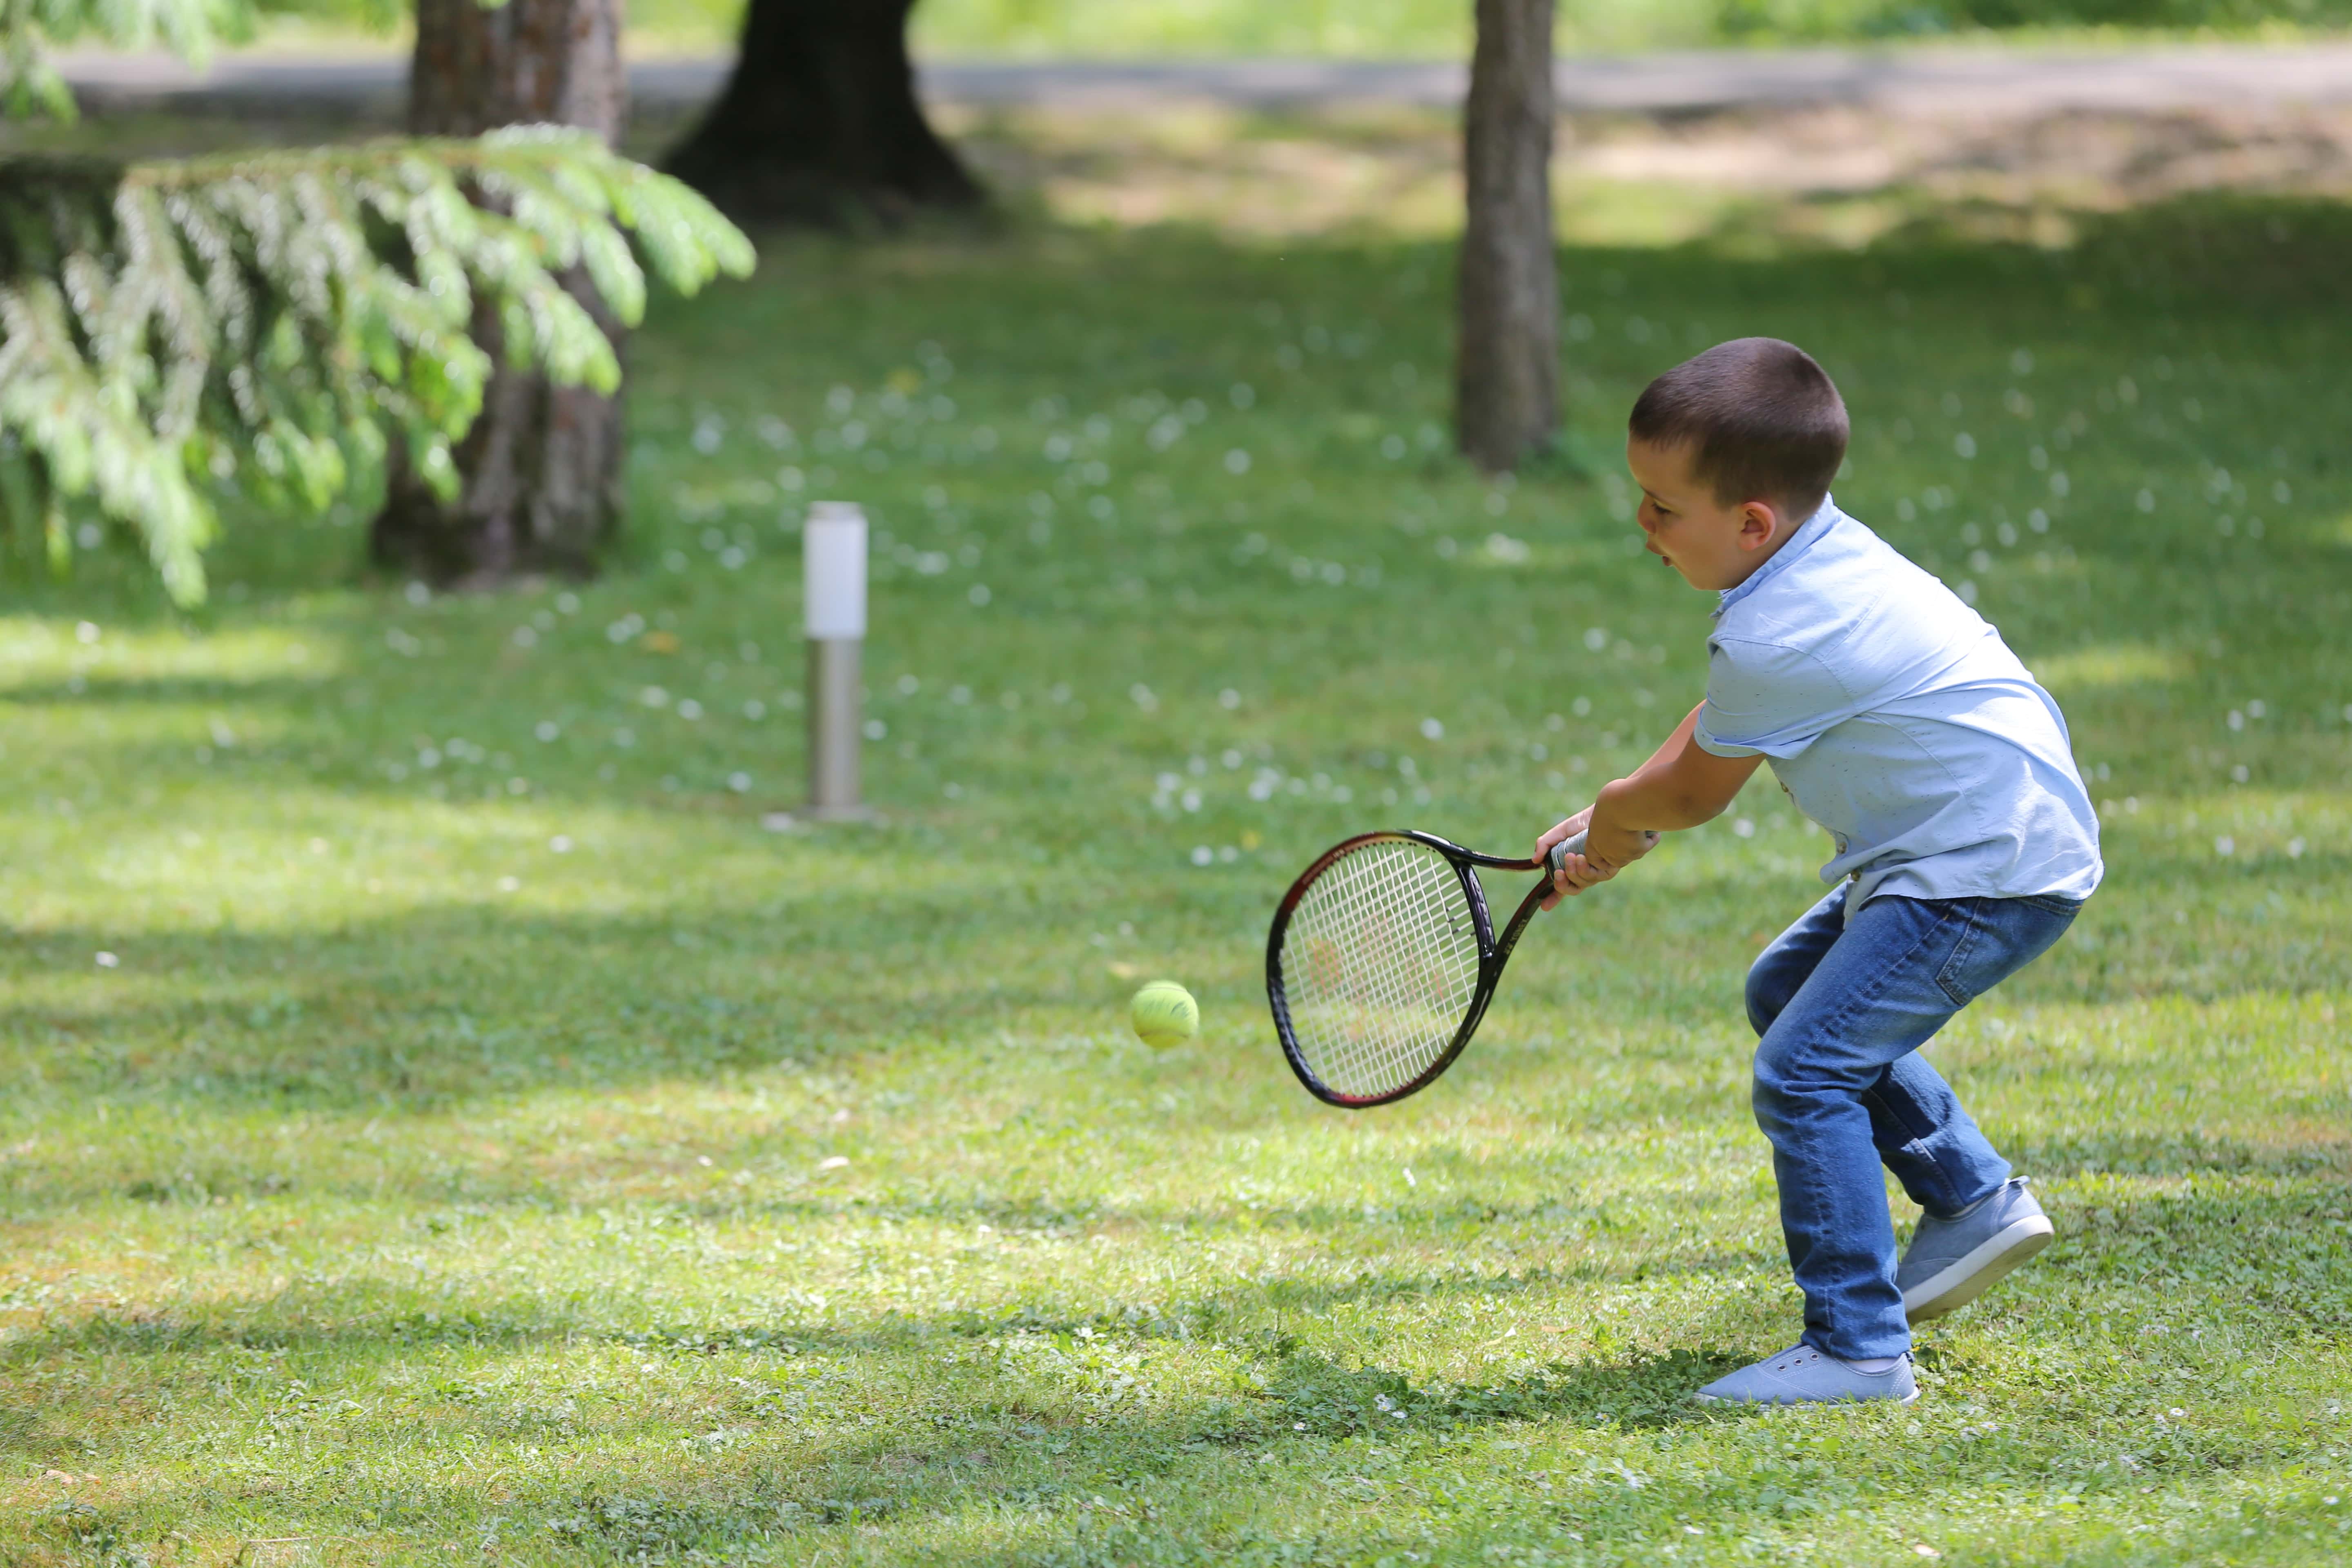 Теннис игра с ракетками. Теннис дети. Большой теннис дети. Игры на газоне. Фотосессия с ракеткой.